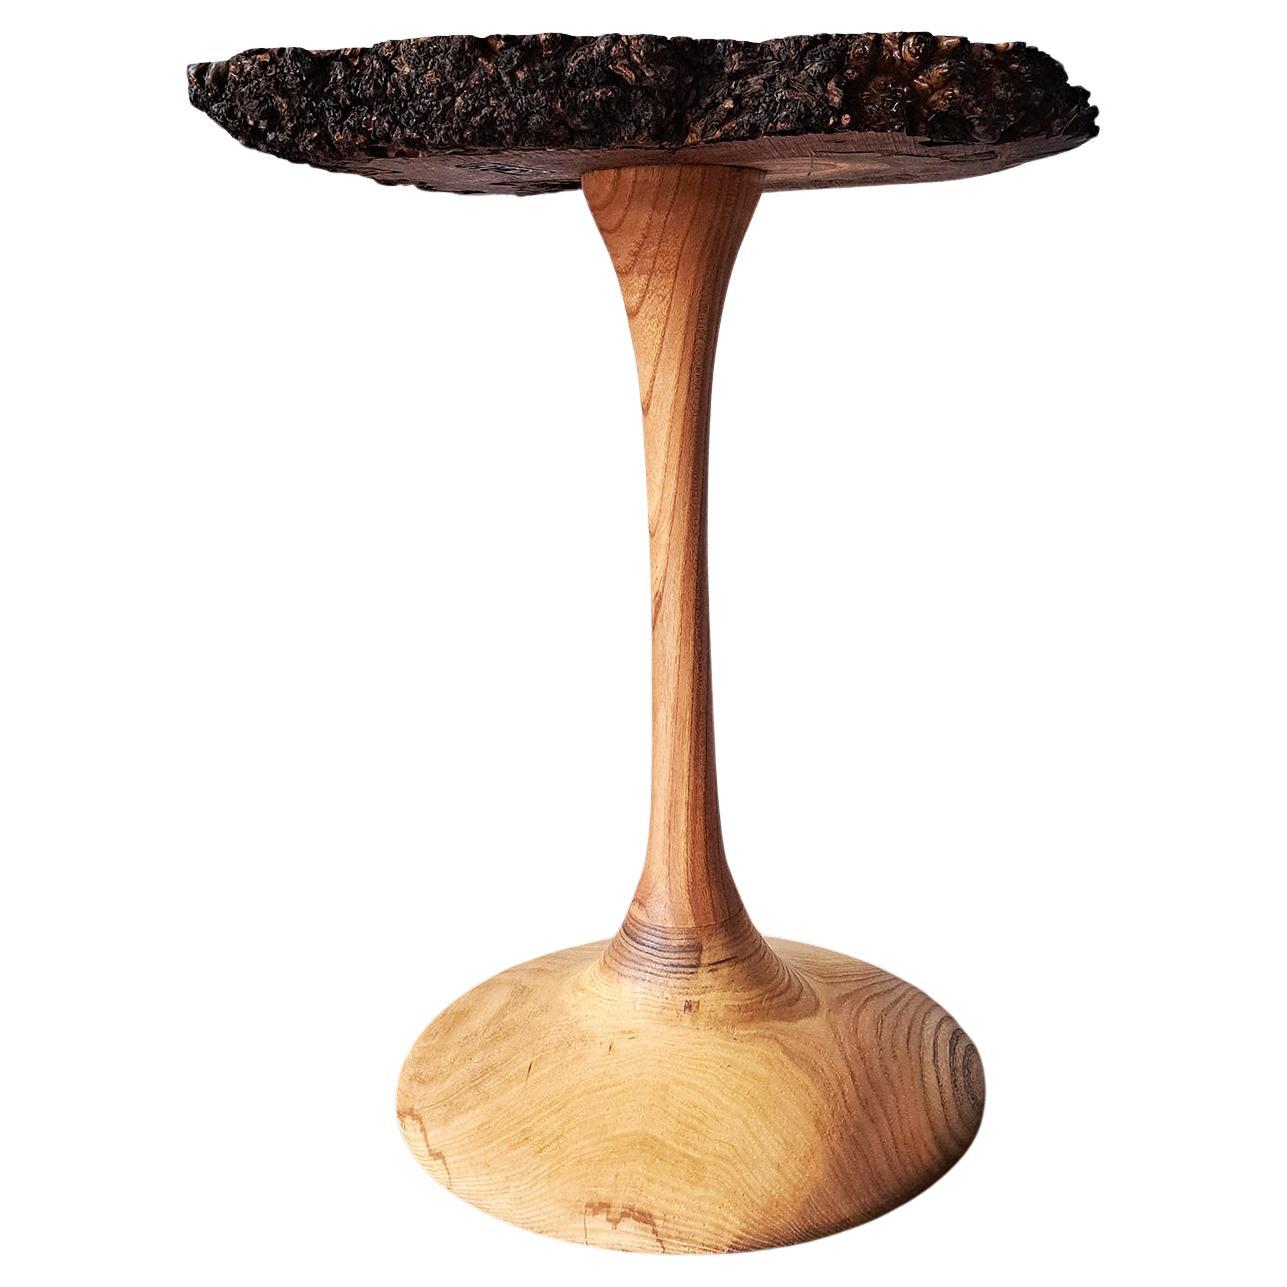 British Free-Form Elm burl wood Side / End Table For Sale